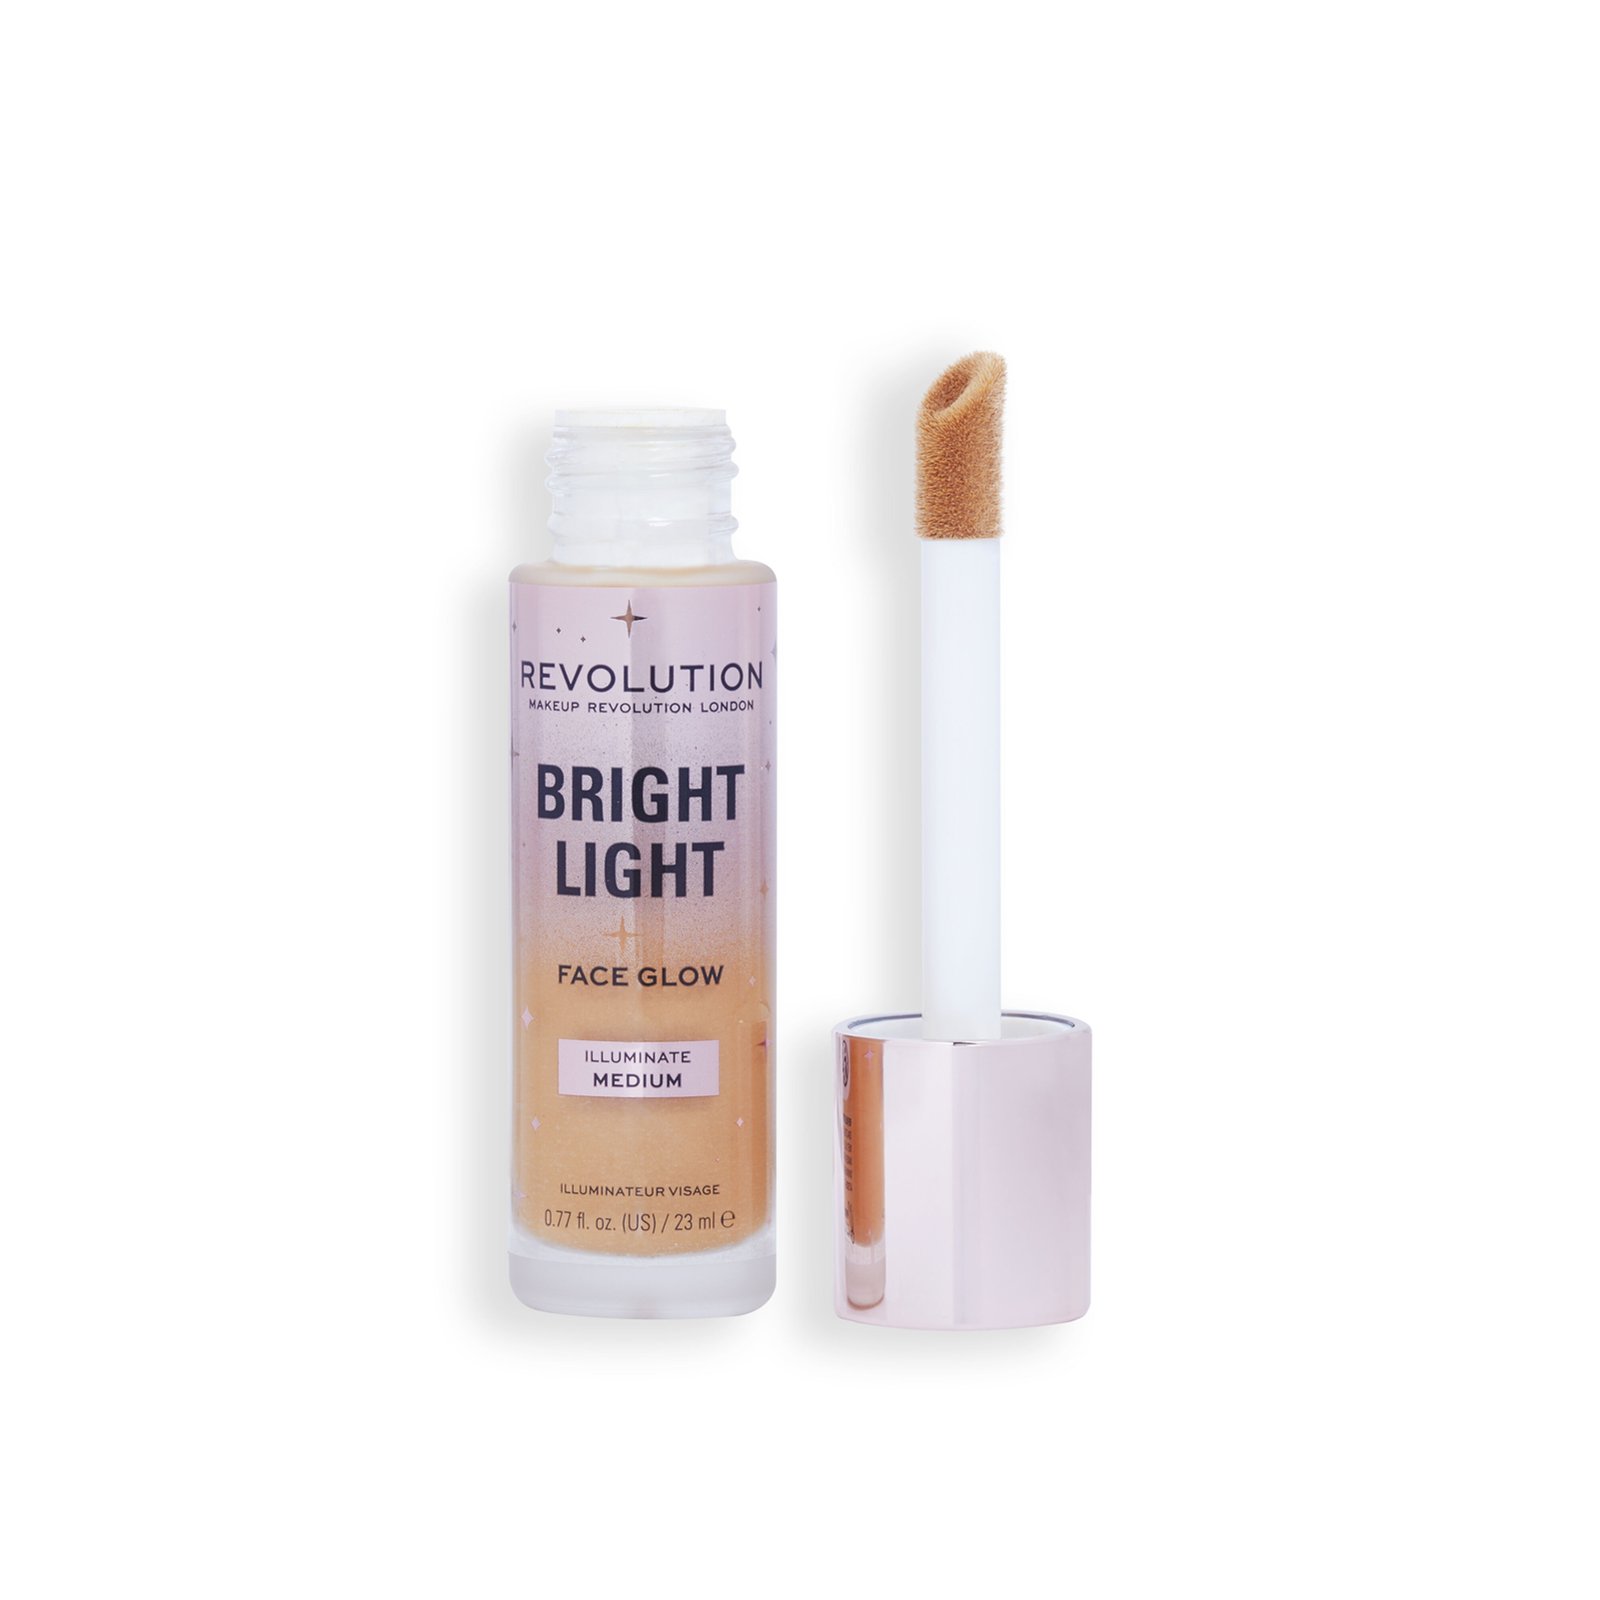 Makeup Revolution Bright Light Face Glow Illuminate Medium 23ml (0.77 fl oz)